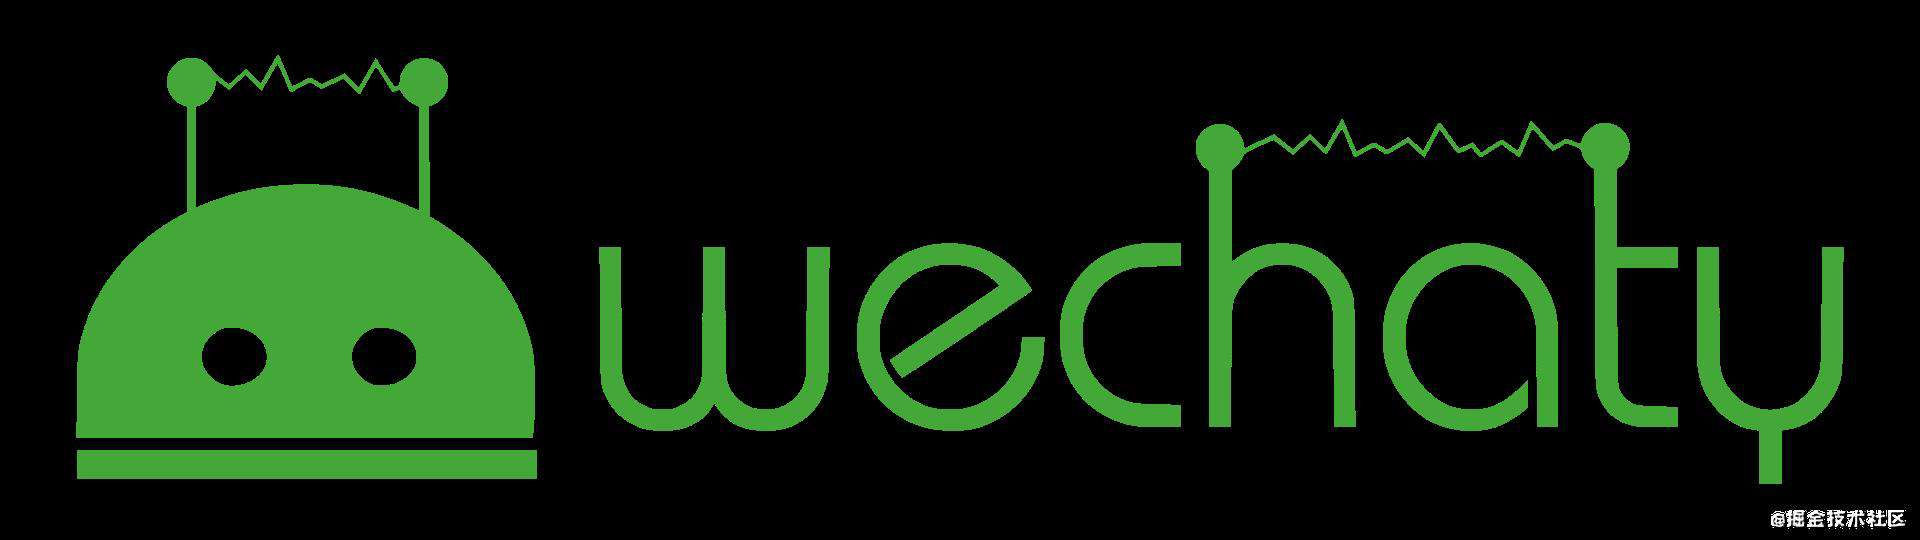 Wechaty | NodeJS基于wechaty-puppet-hostie协议手撸一个企业级微信机器人助手